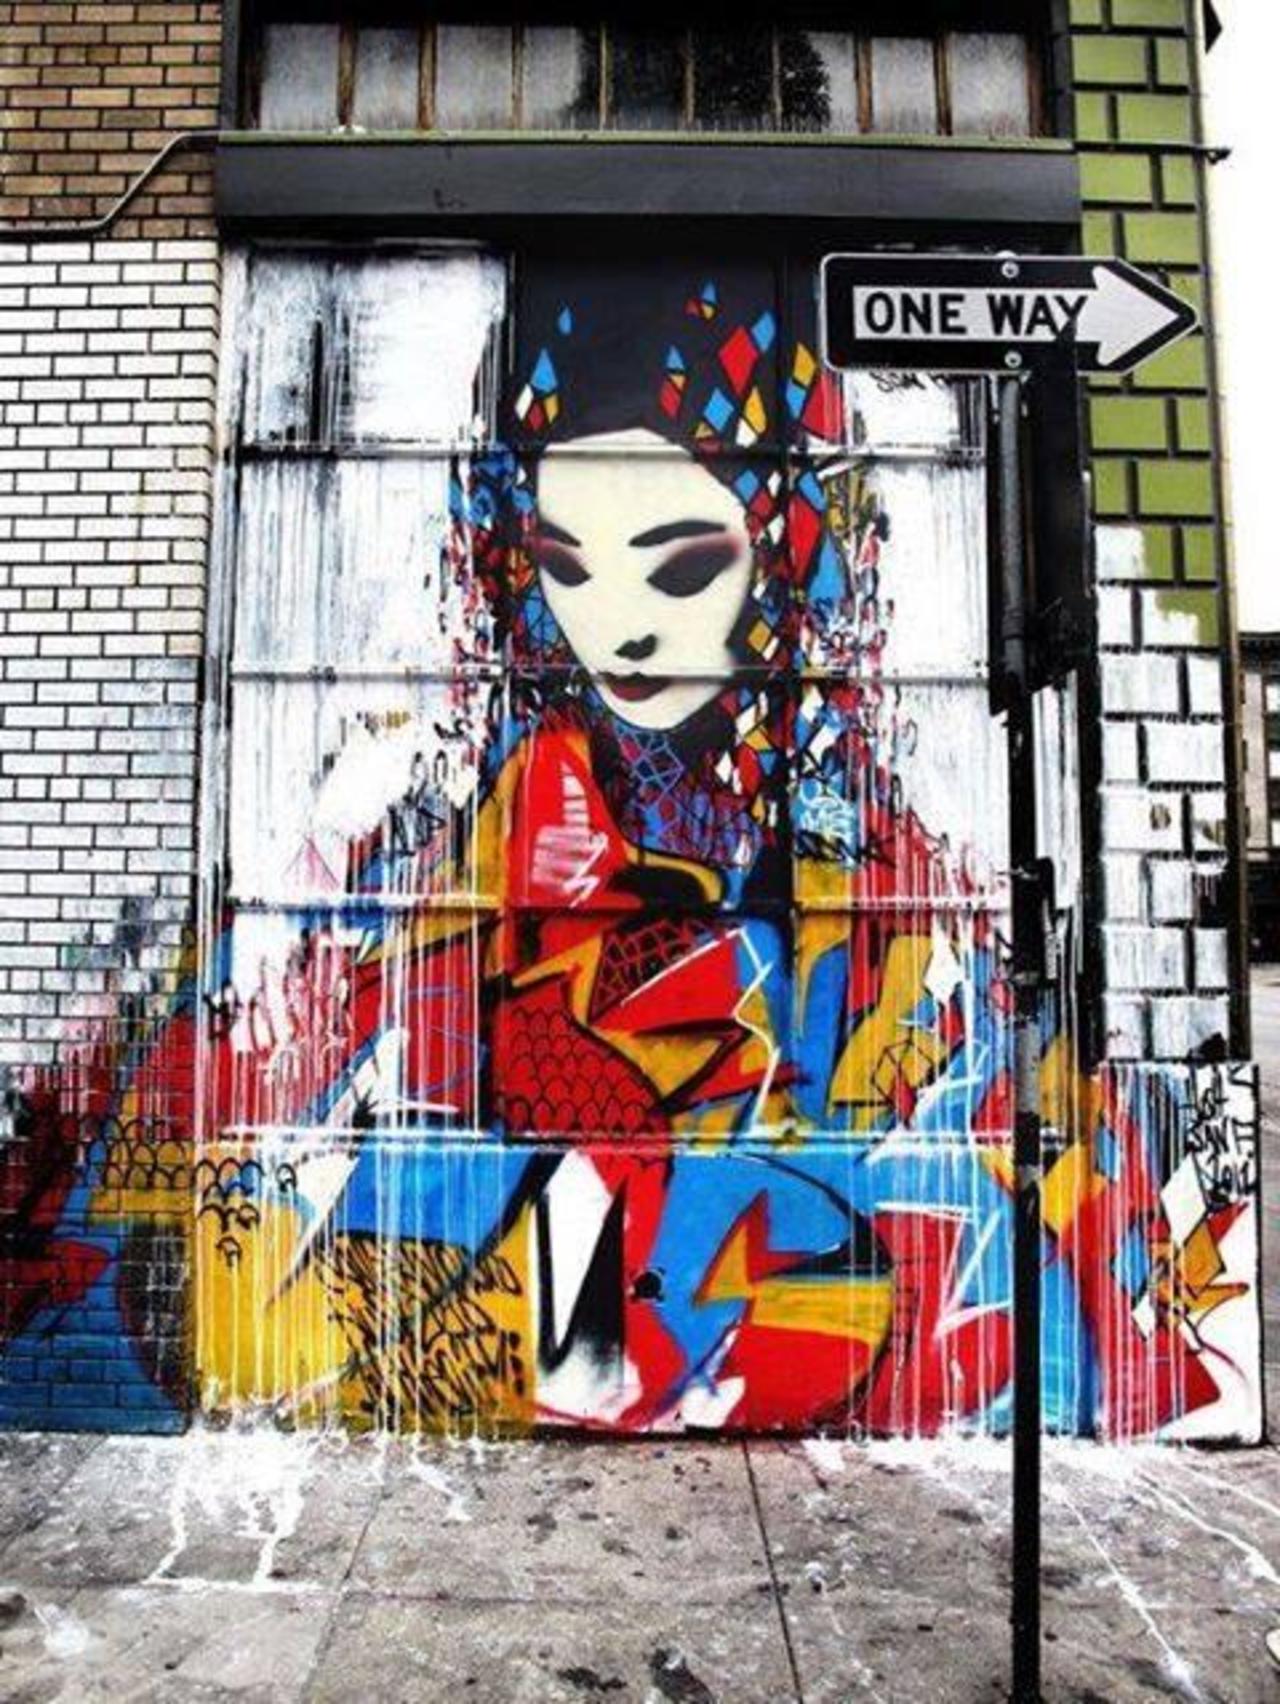 RT @S_Al_Shaheen: Artist: Hush. In San Francisco  #Hush #street art #urban art #art #graff #graffiti #streetart #spray #murals #stencil http://t.co/sNQGbwDSsB